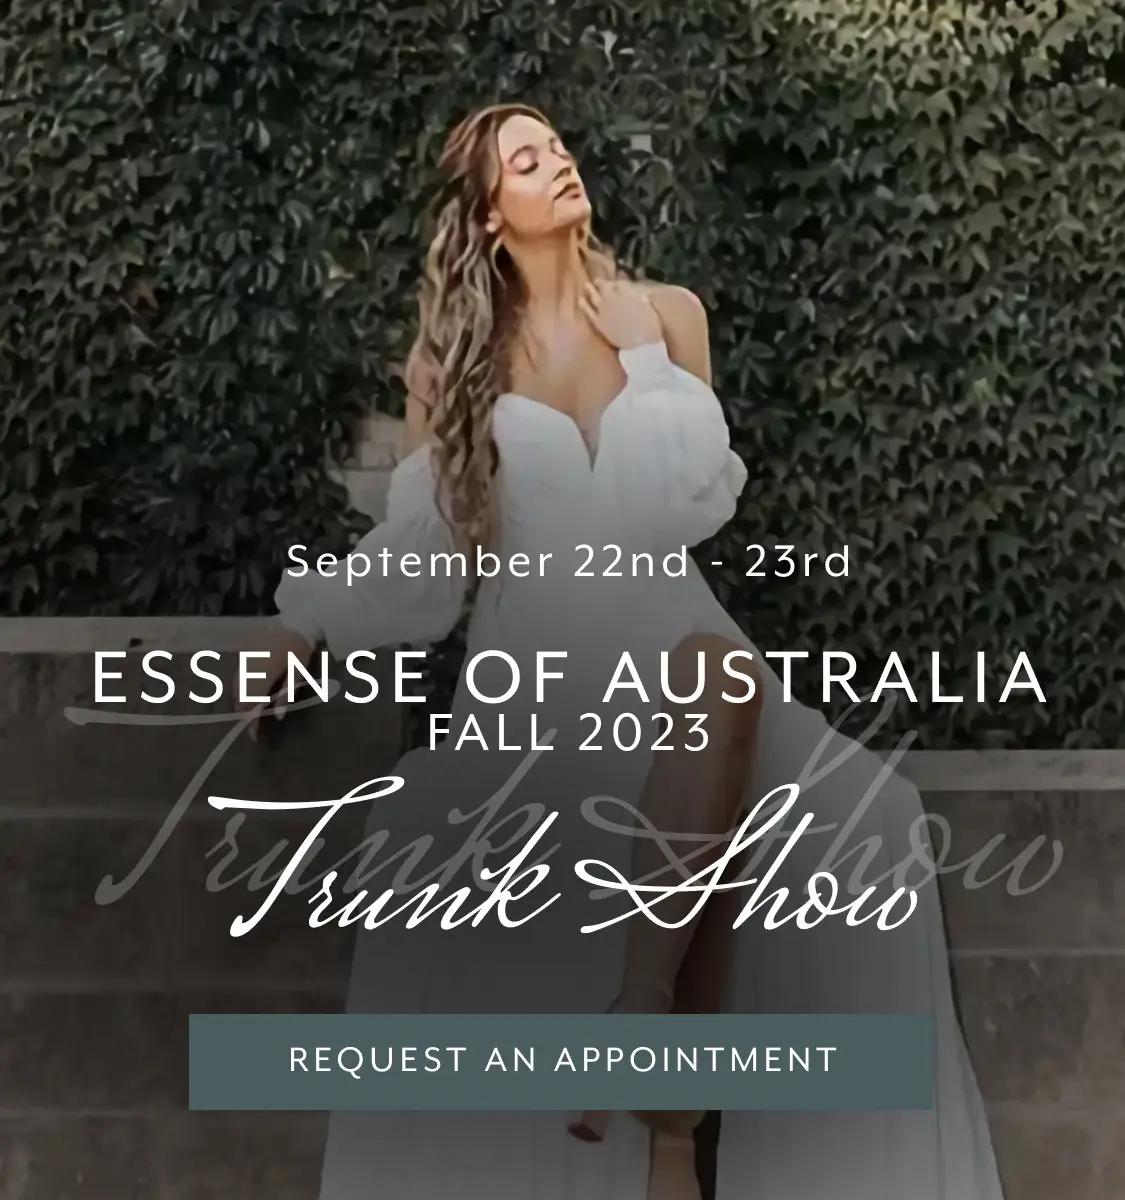 Essense of Australia Fall 2023 Trunk Show Banner Mobile